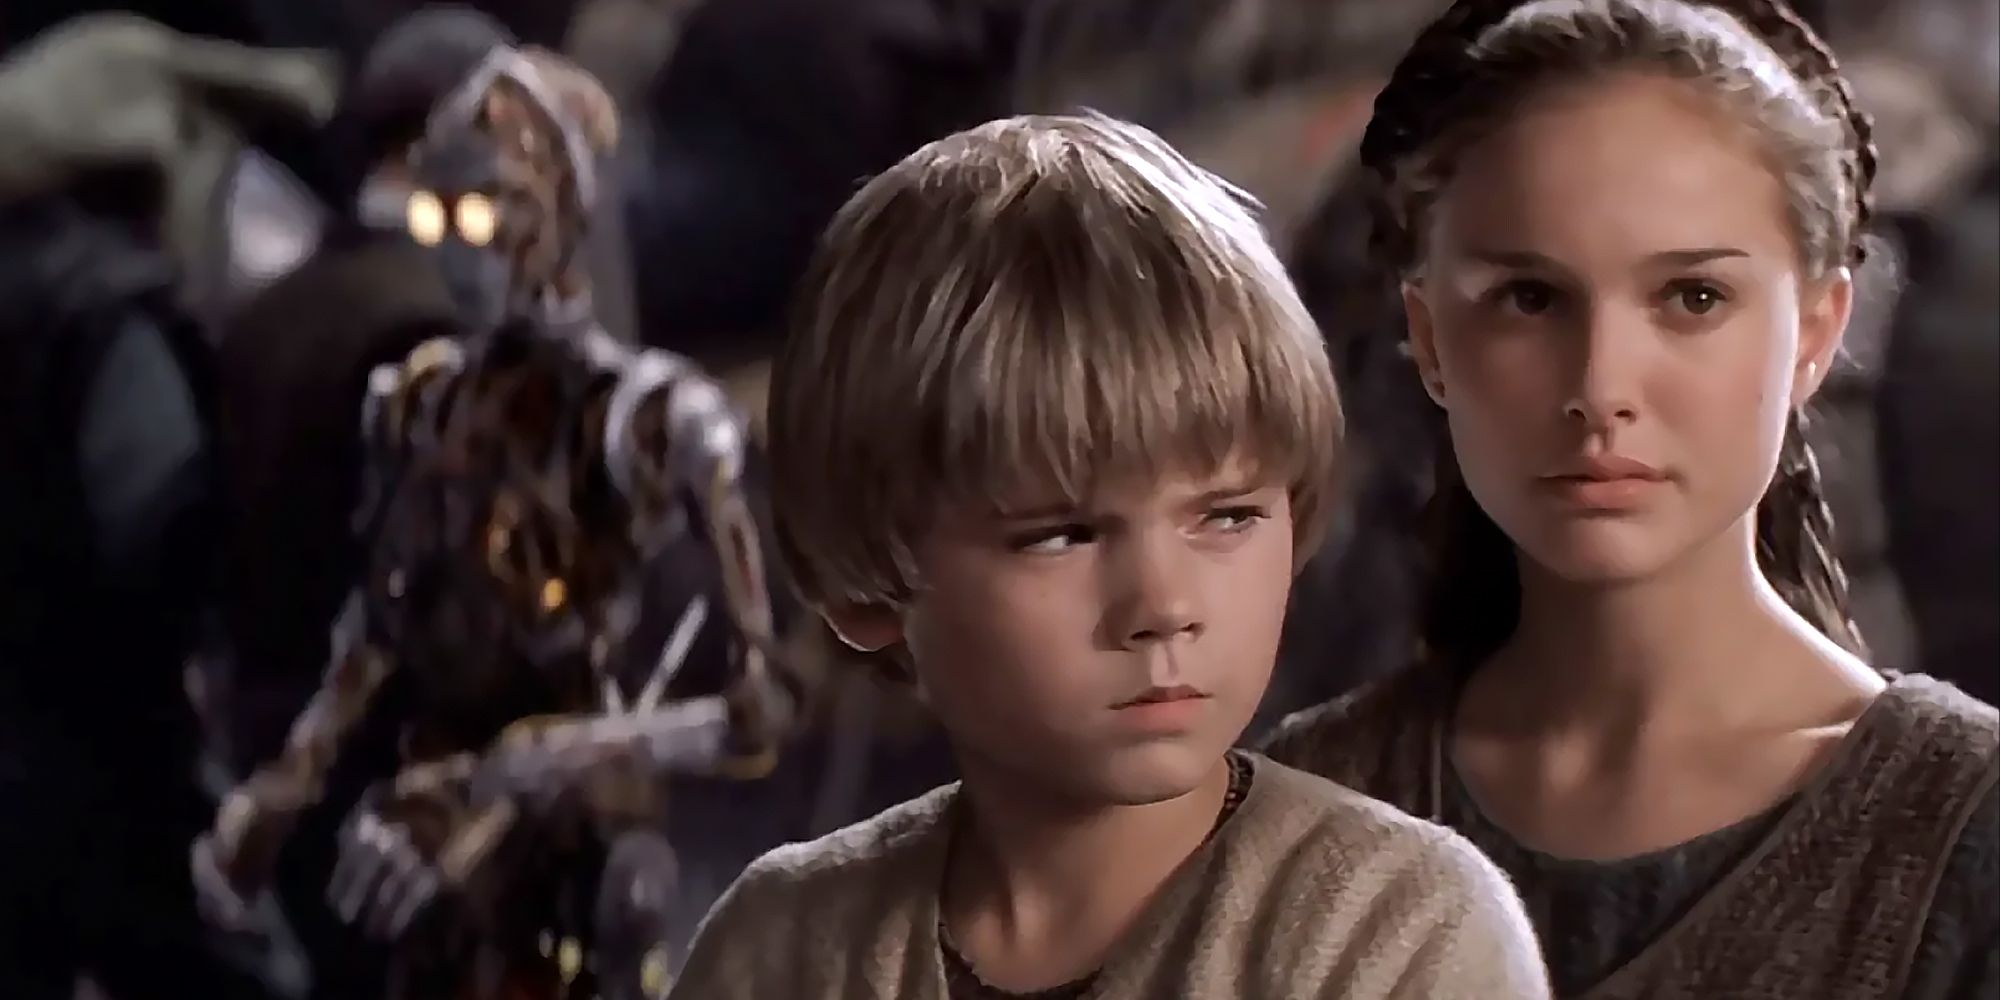 Hayden Christensen Shares How Jake Lloyd Influenced Anakin Skywalker Portrayal